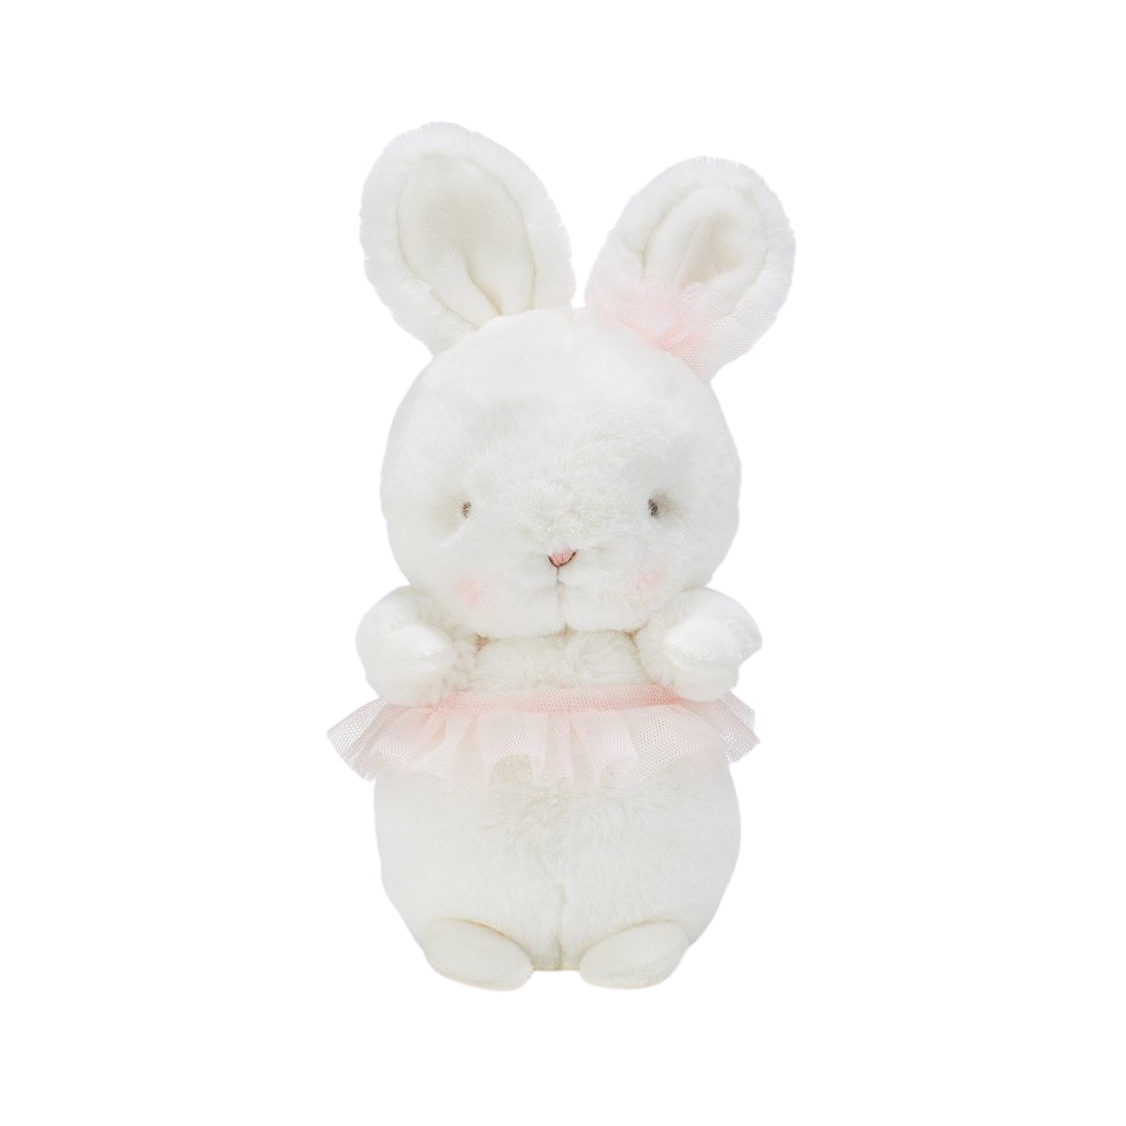 Bunny Rabbit White Plush Headband w Pink Satin Ears Costume Accessory 